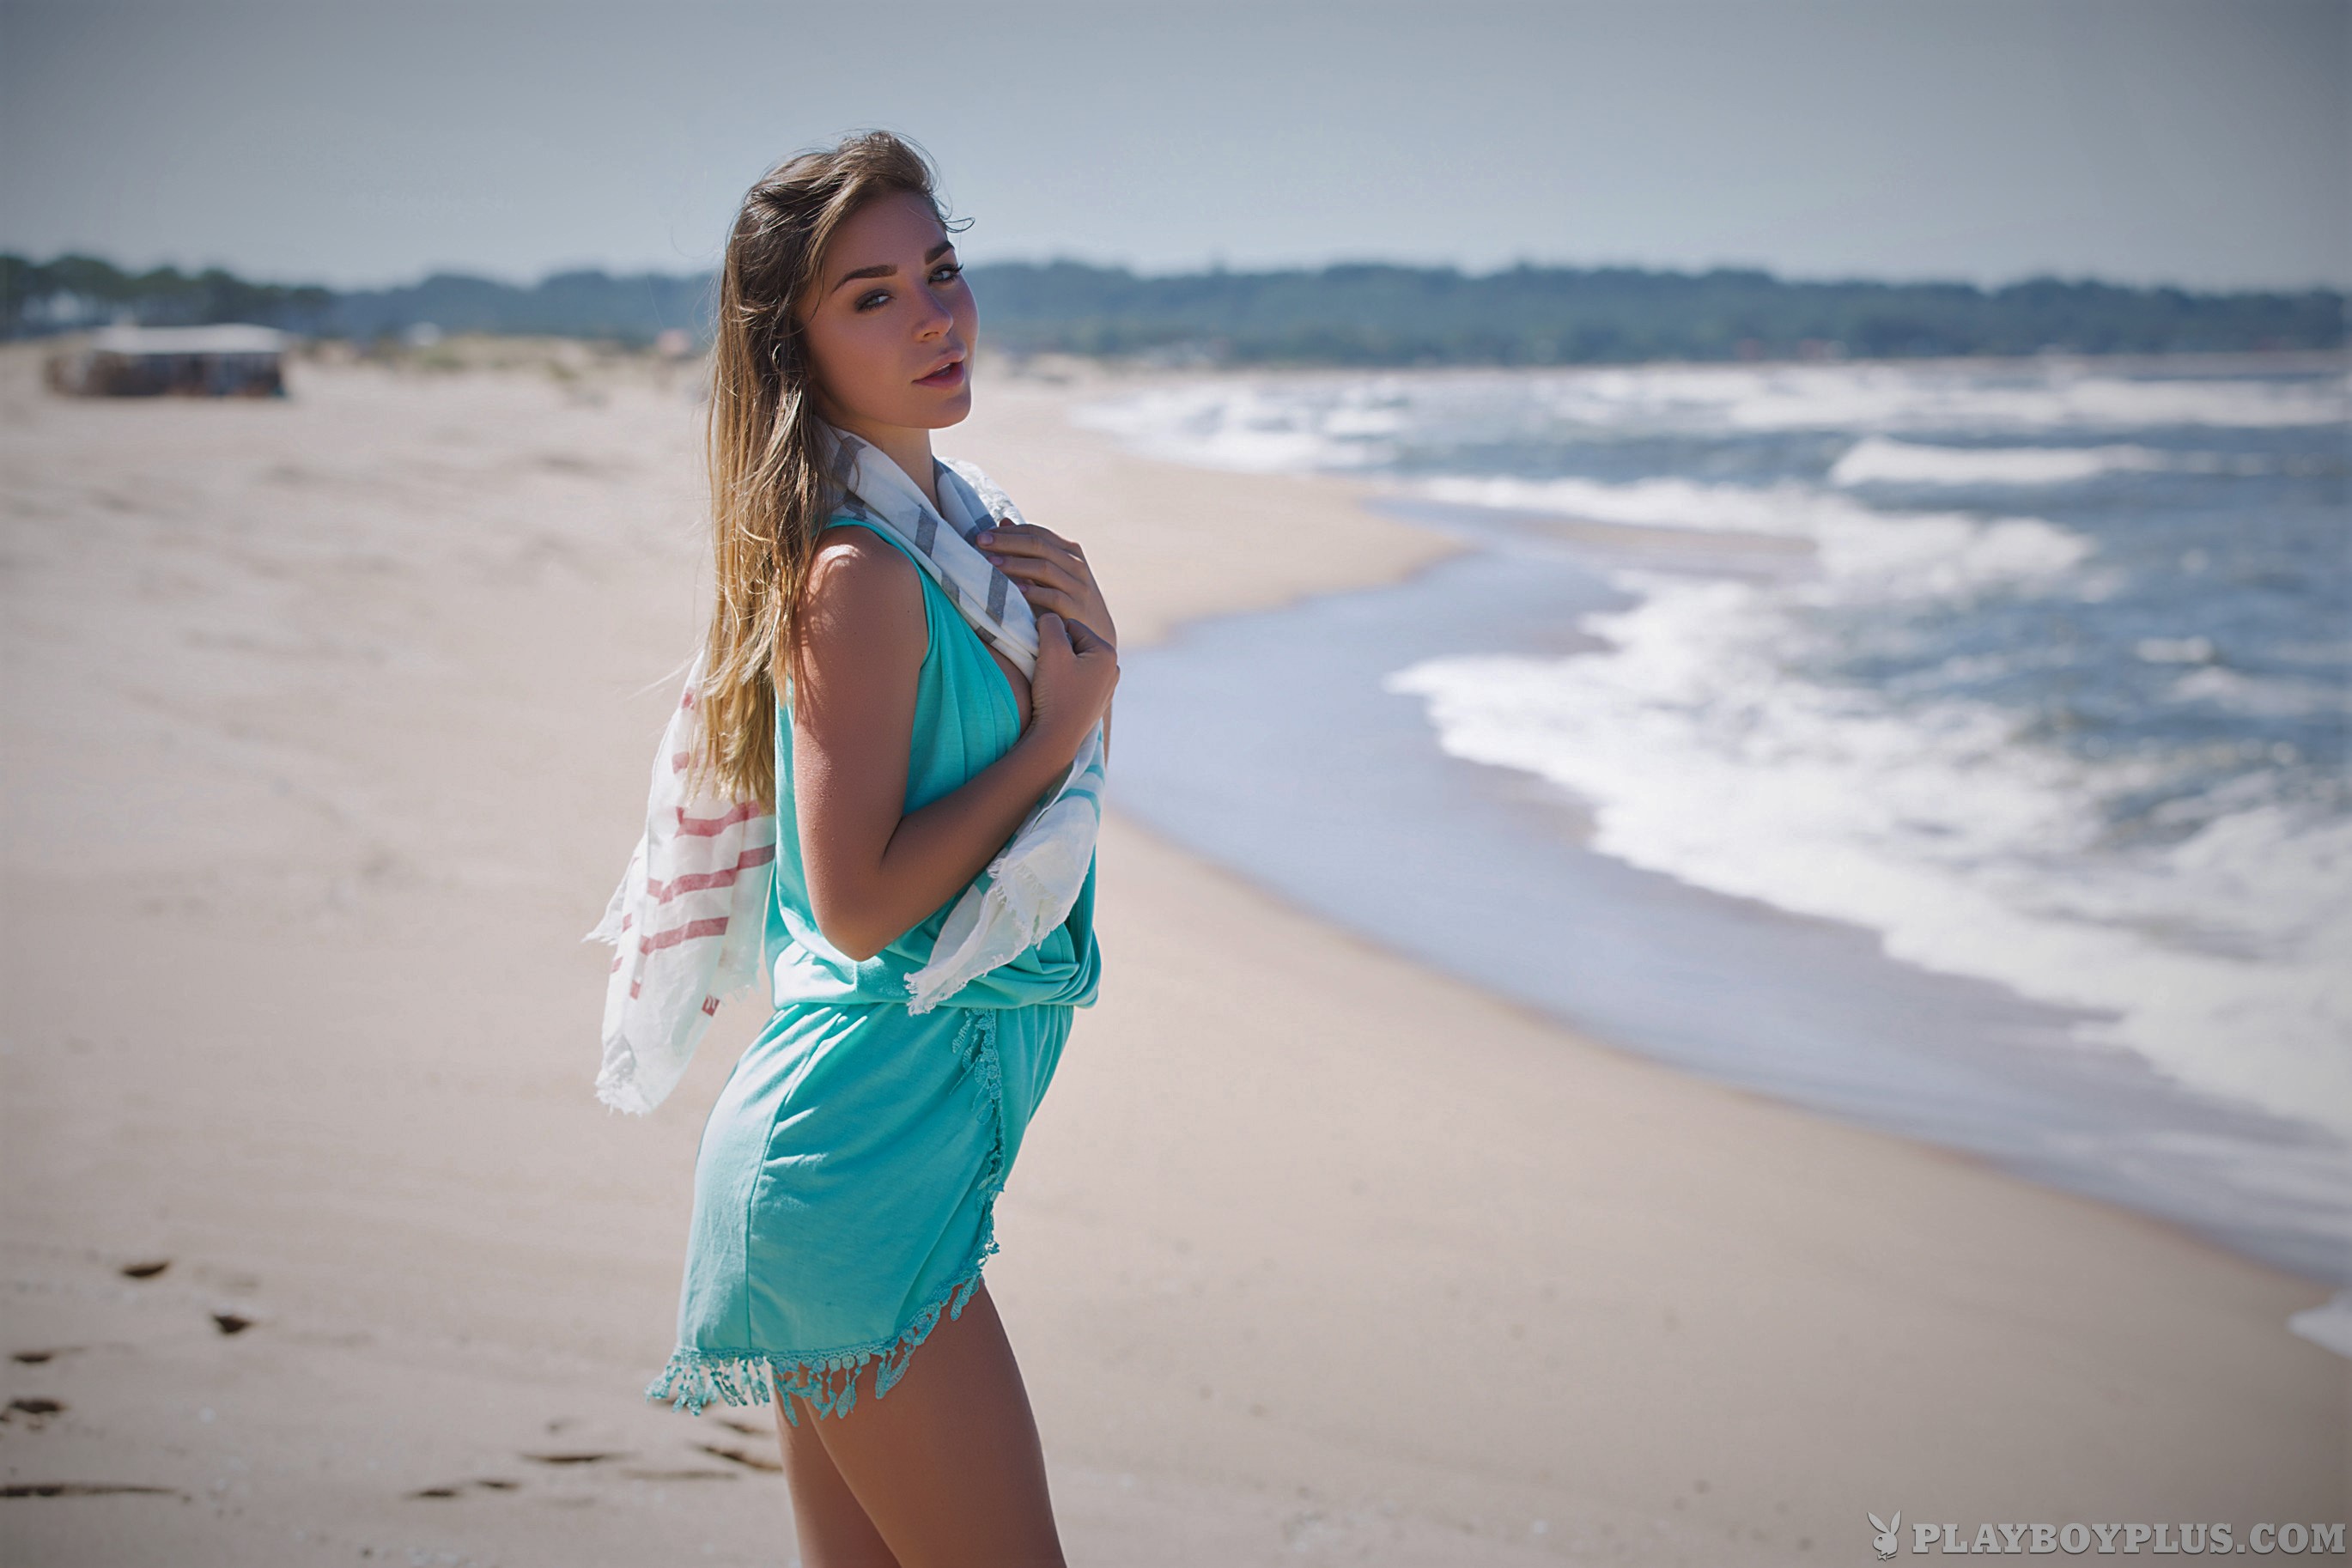 Women Lily Chey Women Outdoors Model Beach Playboy Blue Dress Women On Beach Playboy